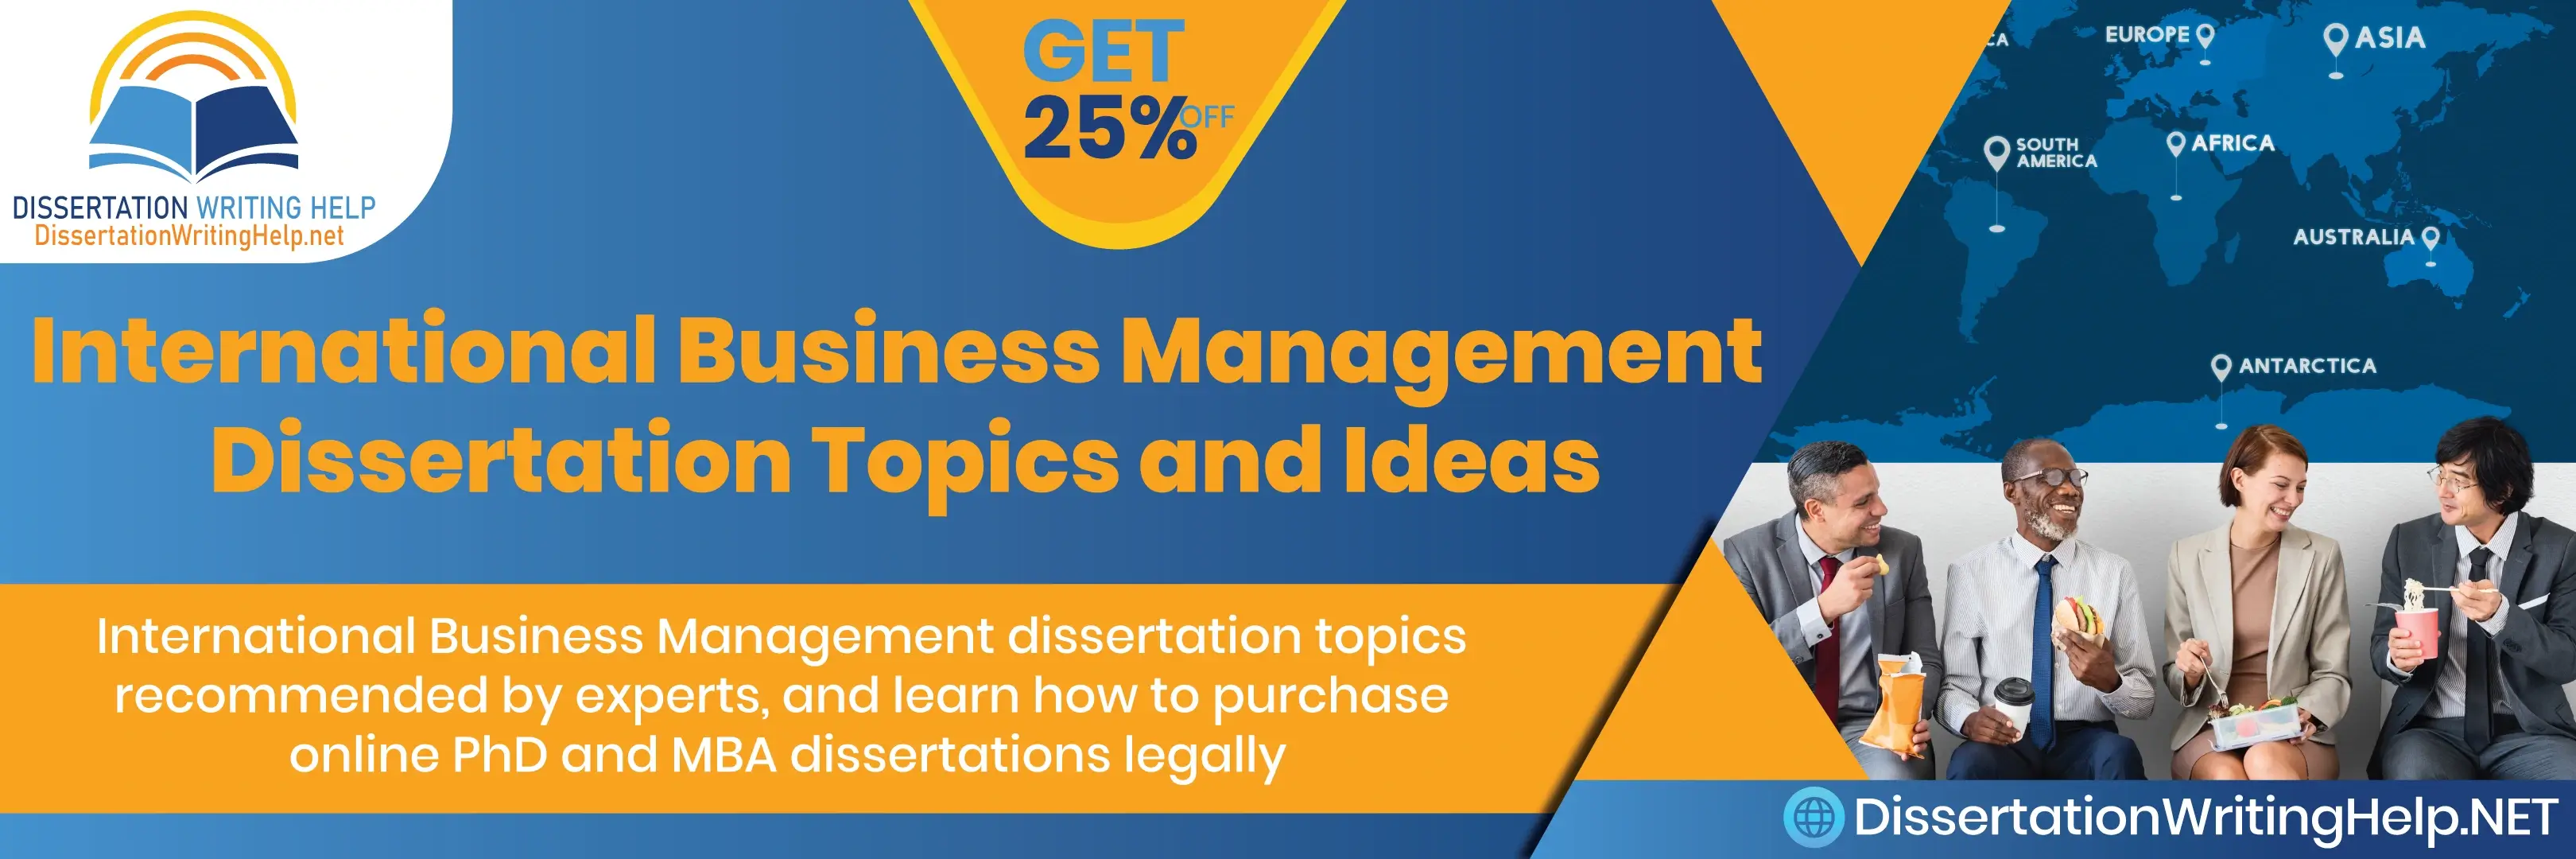 International-Business-Management-Dissertation-Topics-and-Ideas